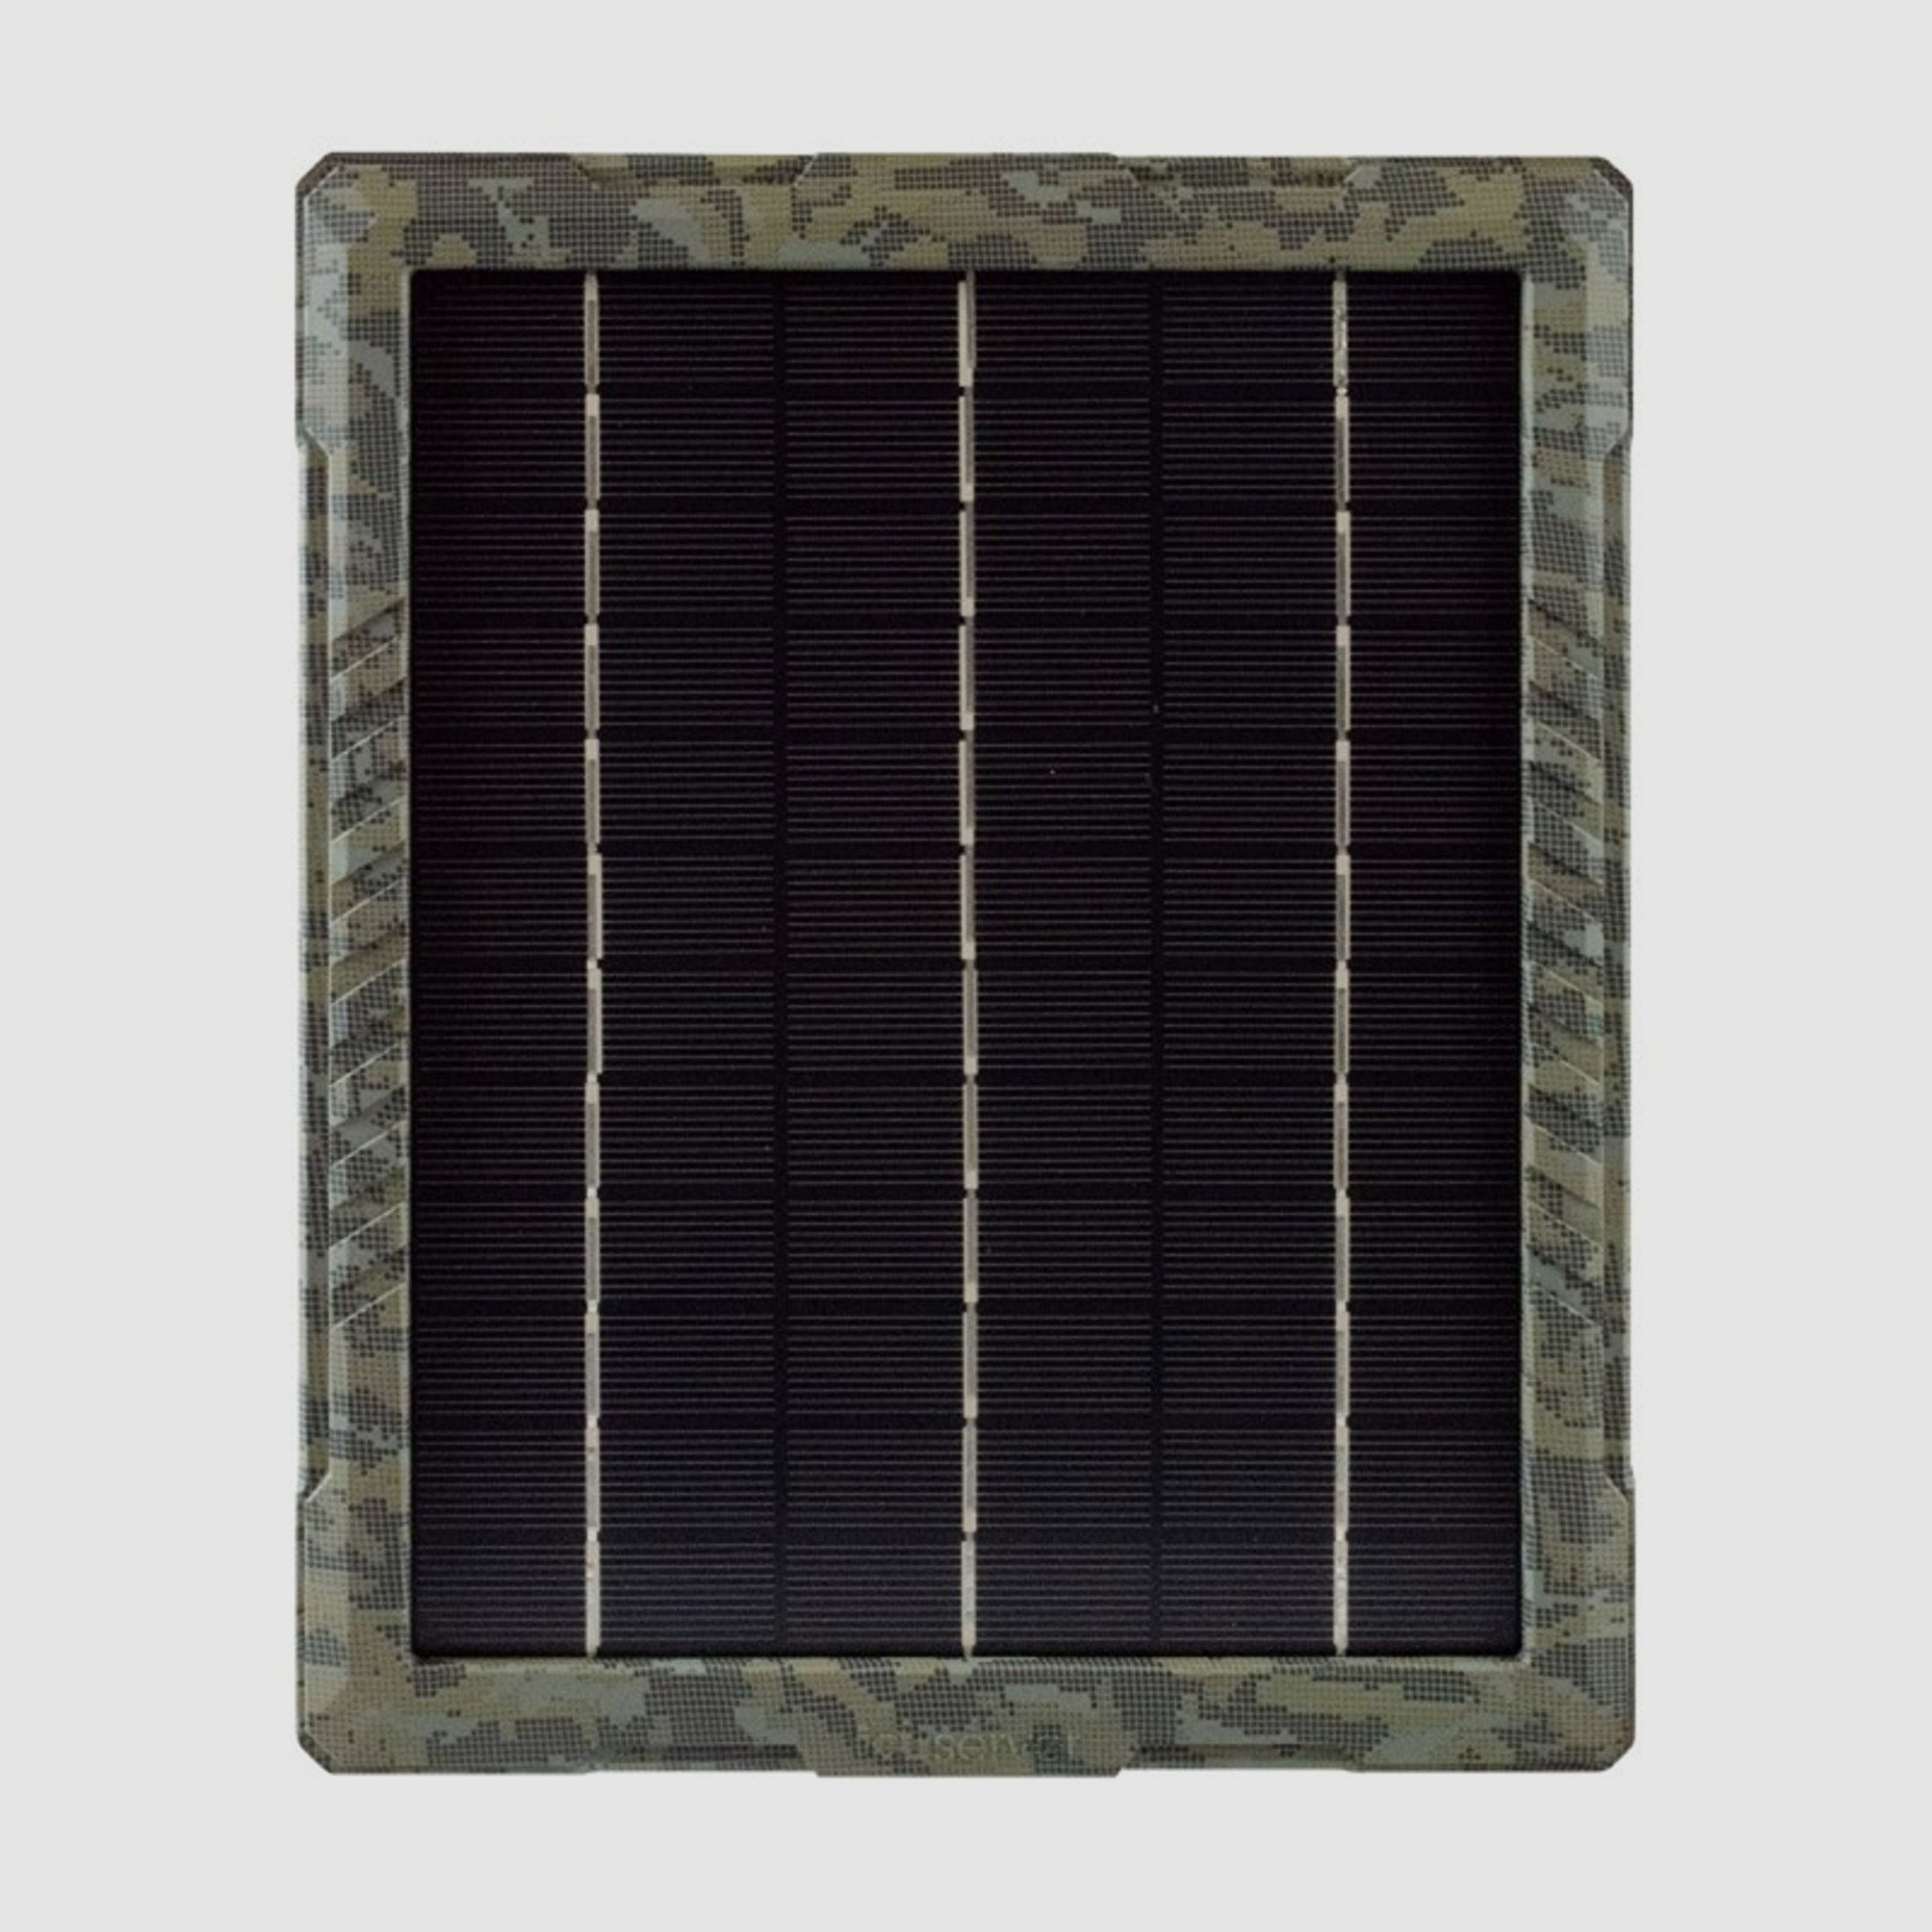 ICUserver Sun Solarpanel 5,4W